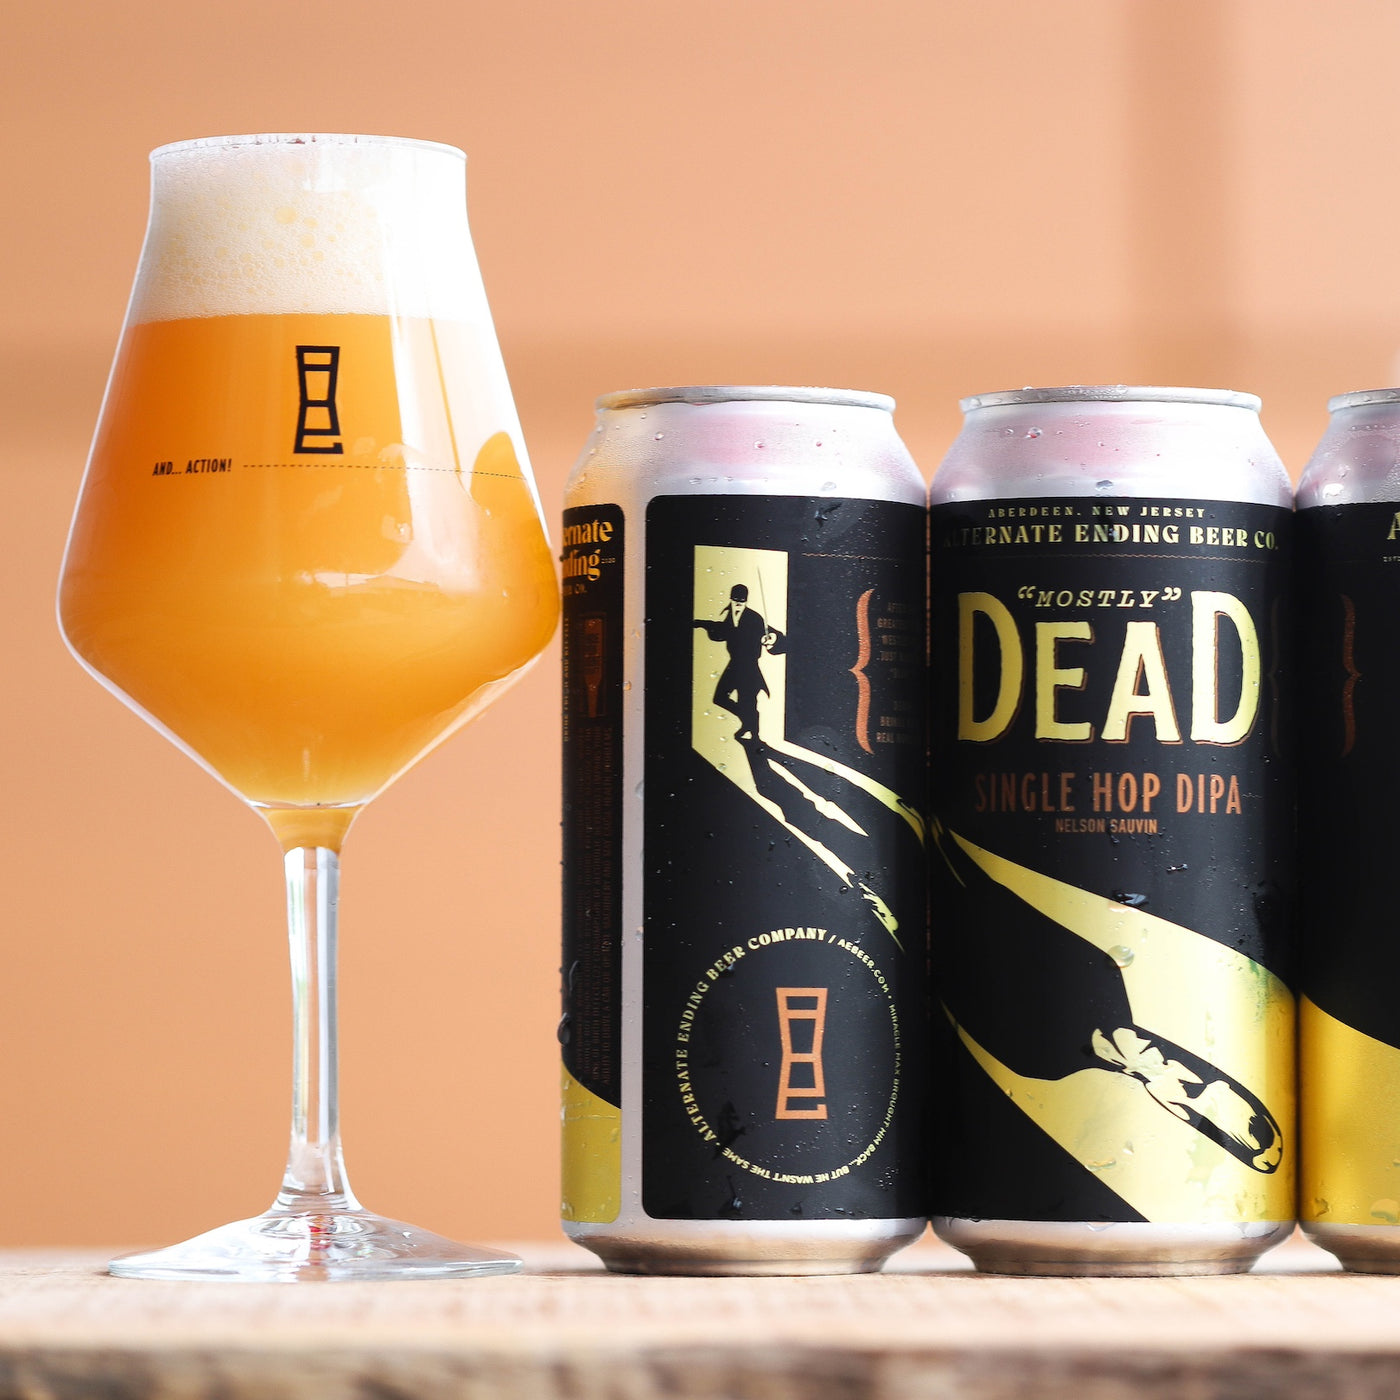 Alternate Ending Beer Co. Single Hop DIPA 8% ABV Mostly Dead